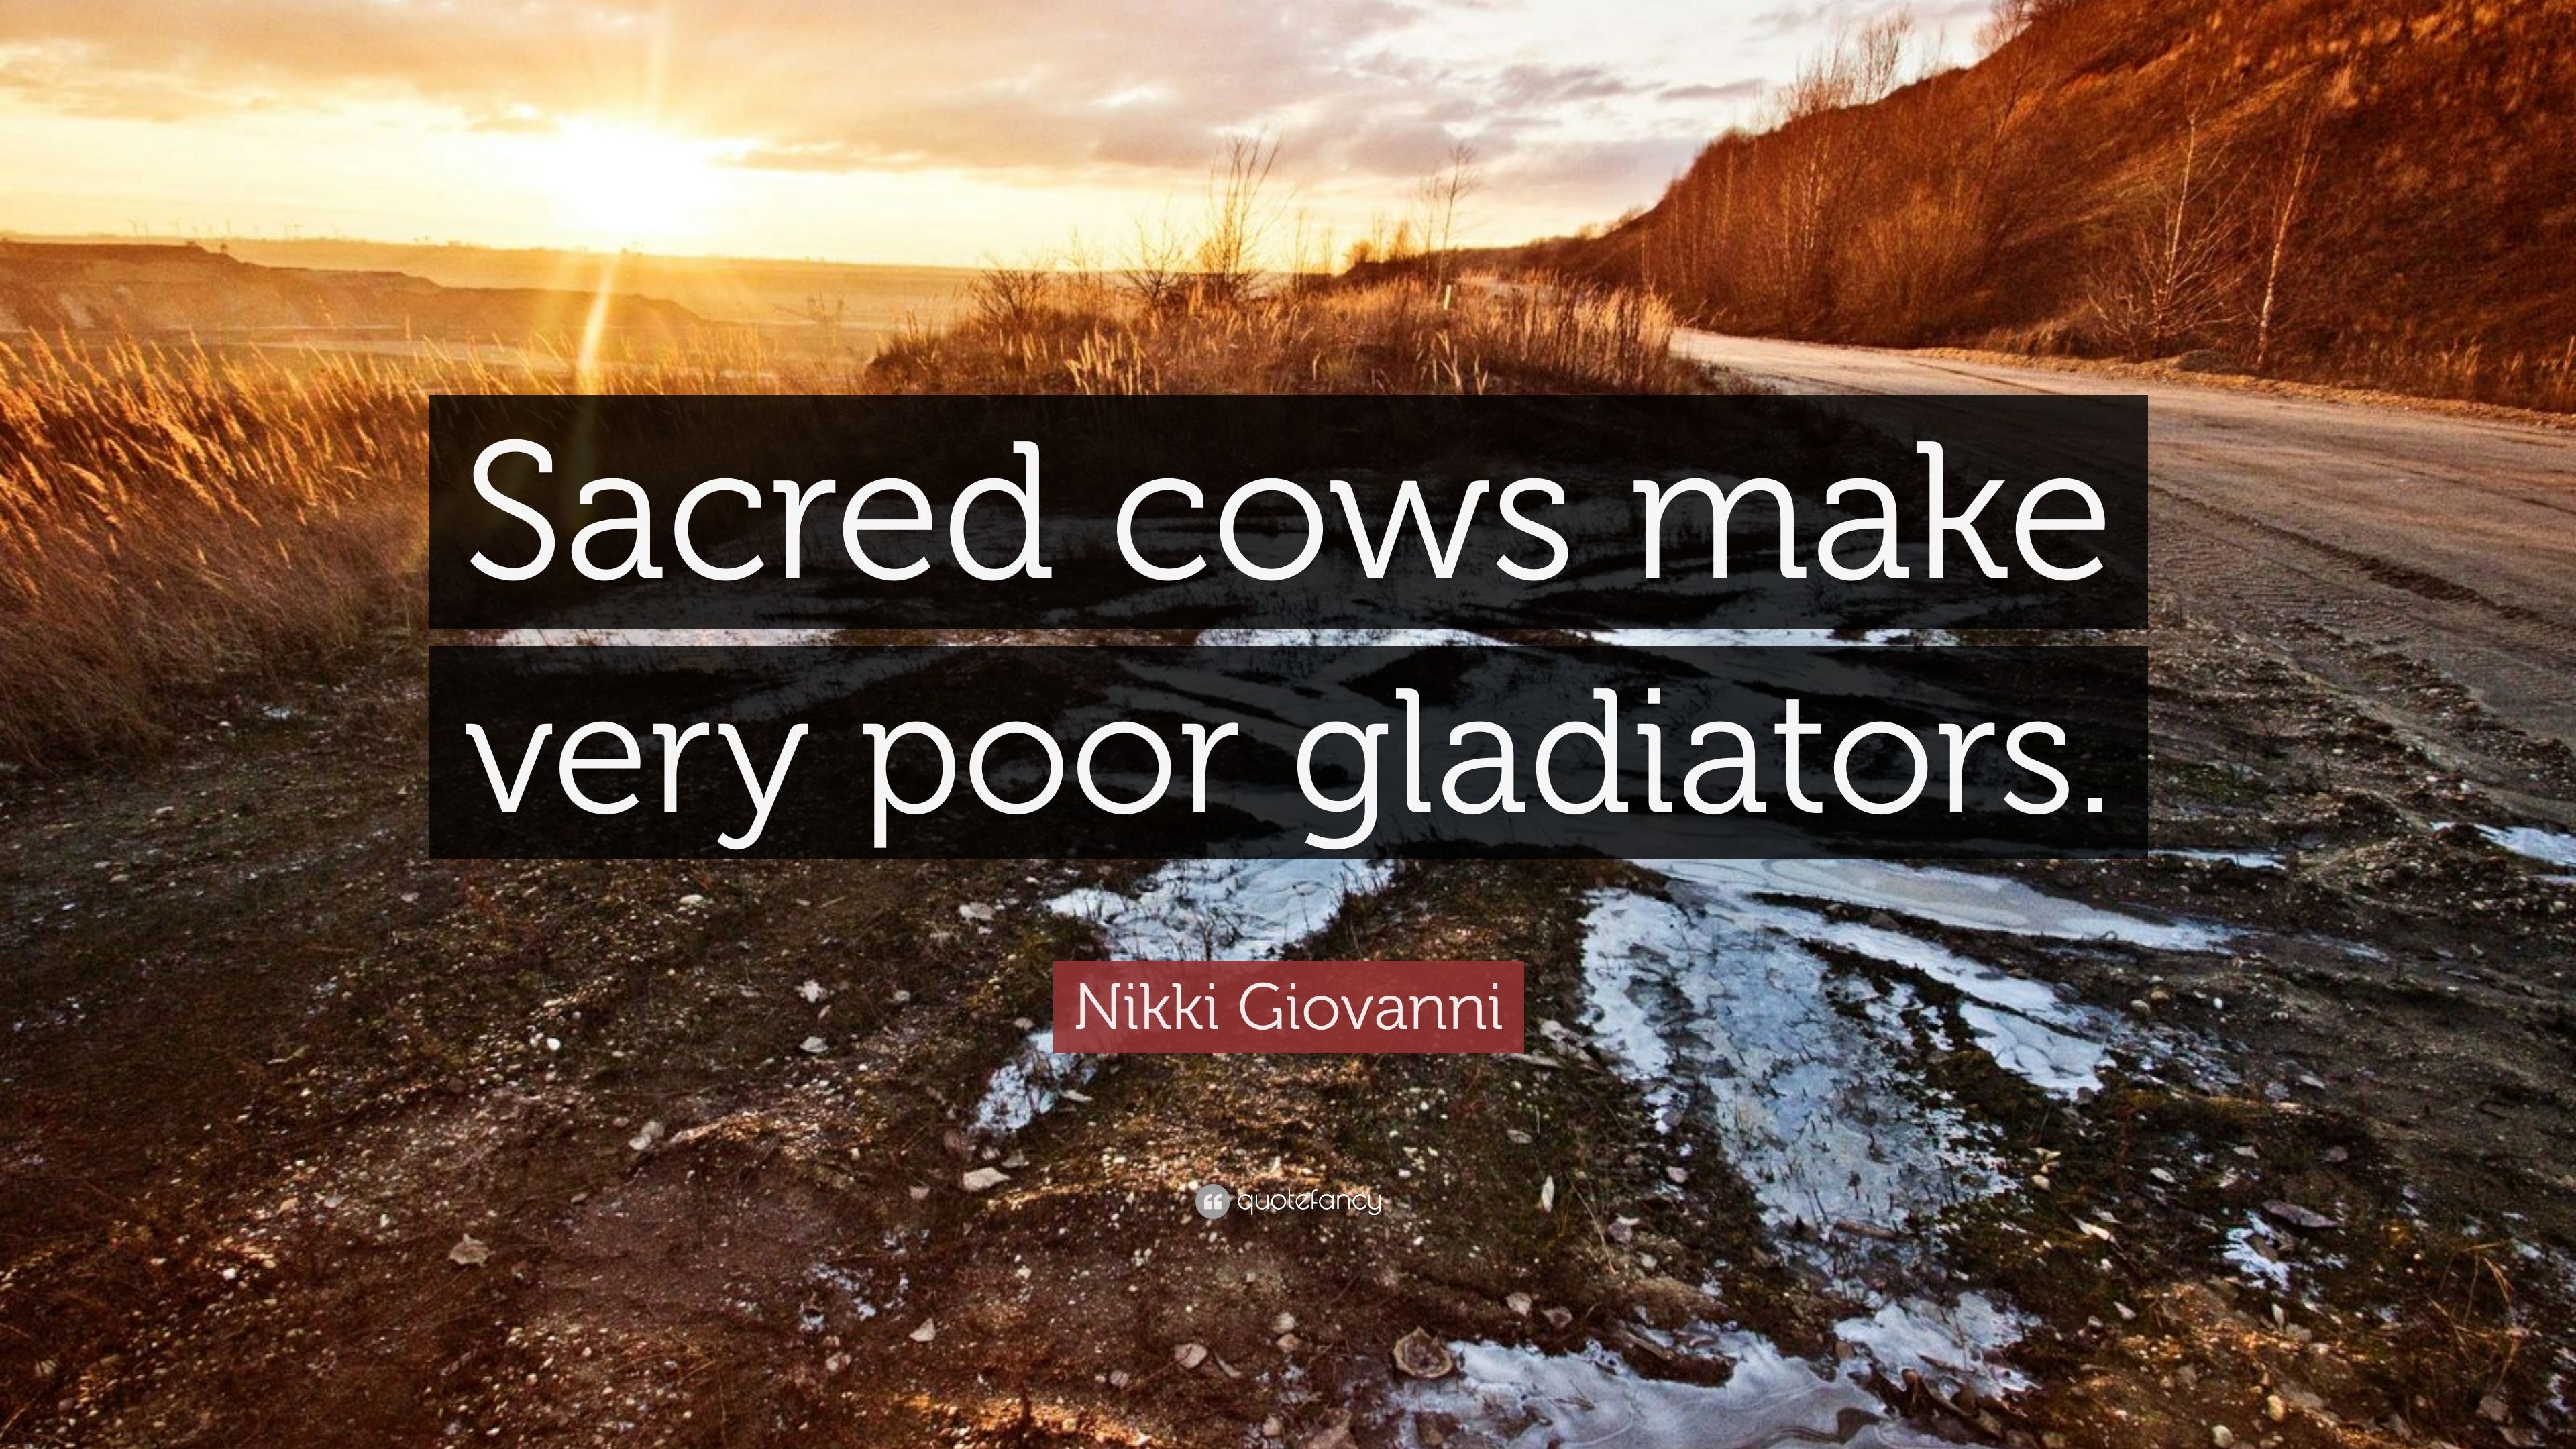 Nikki Giovanni Quote: “Sacred cows make very poor gladiators.” 7